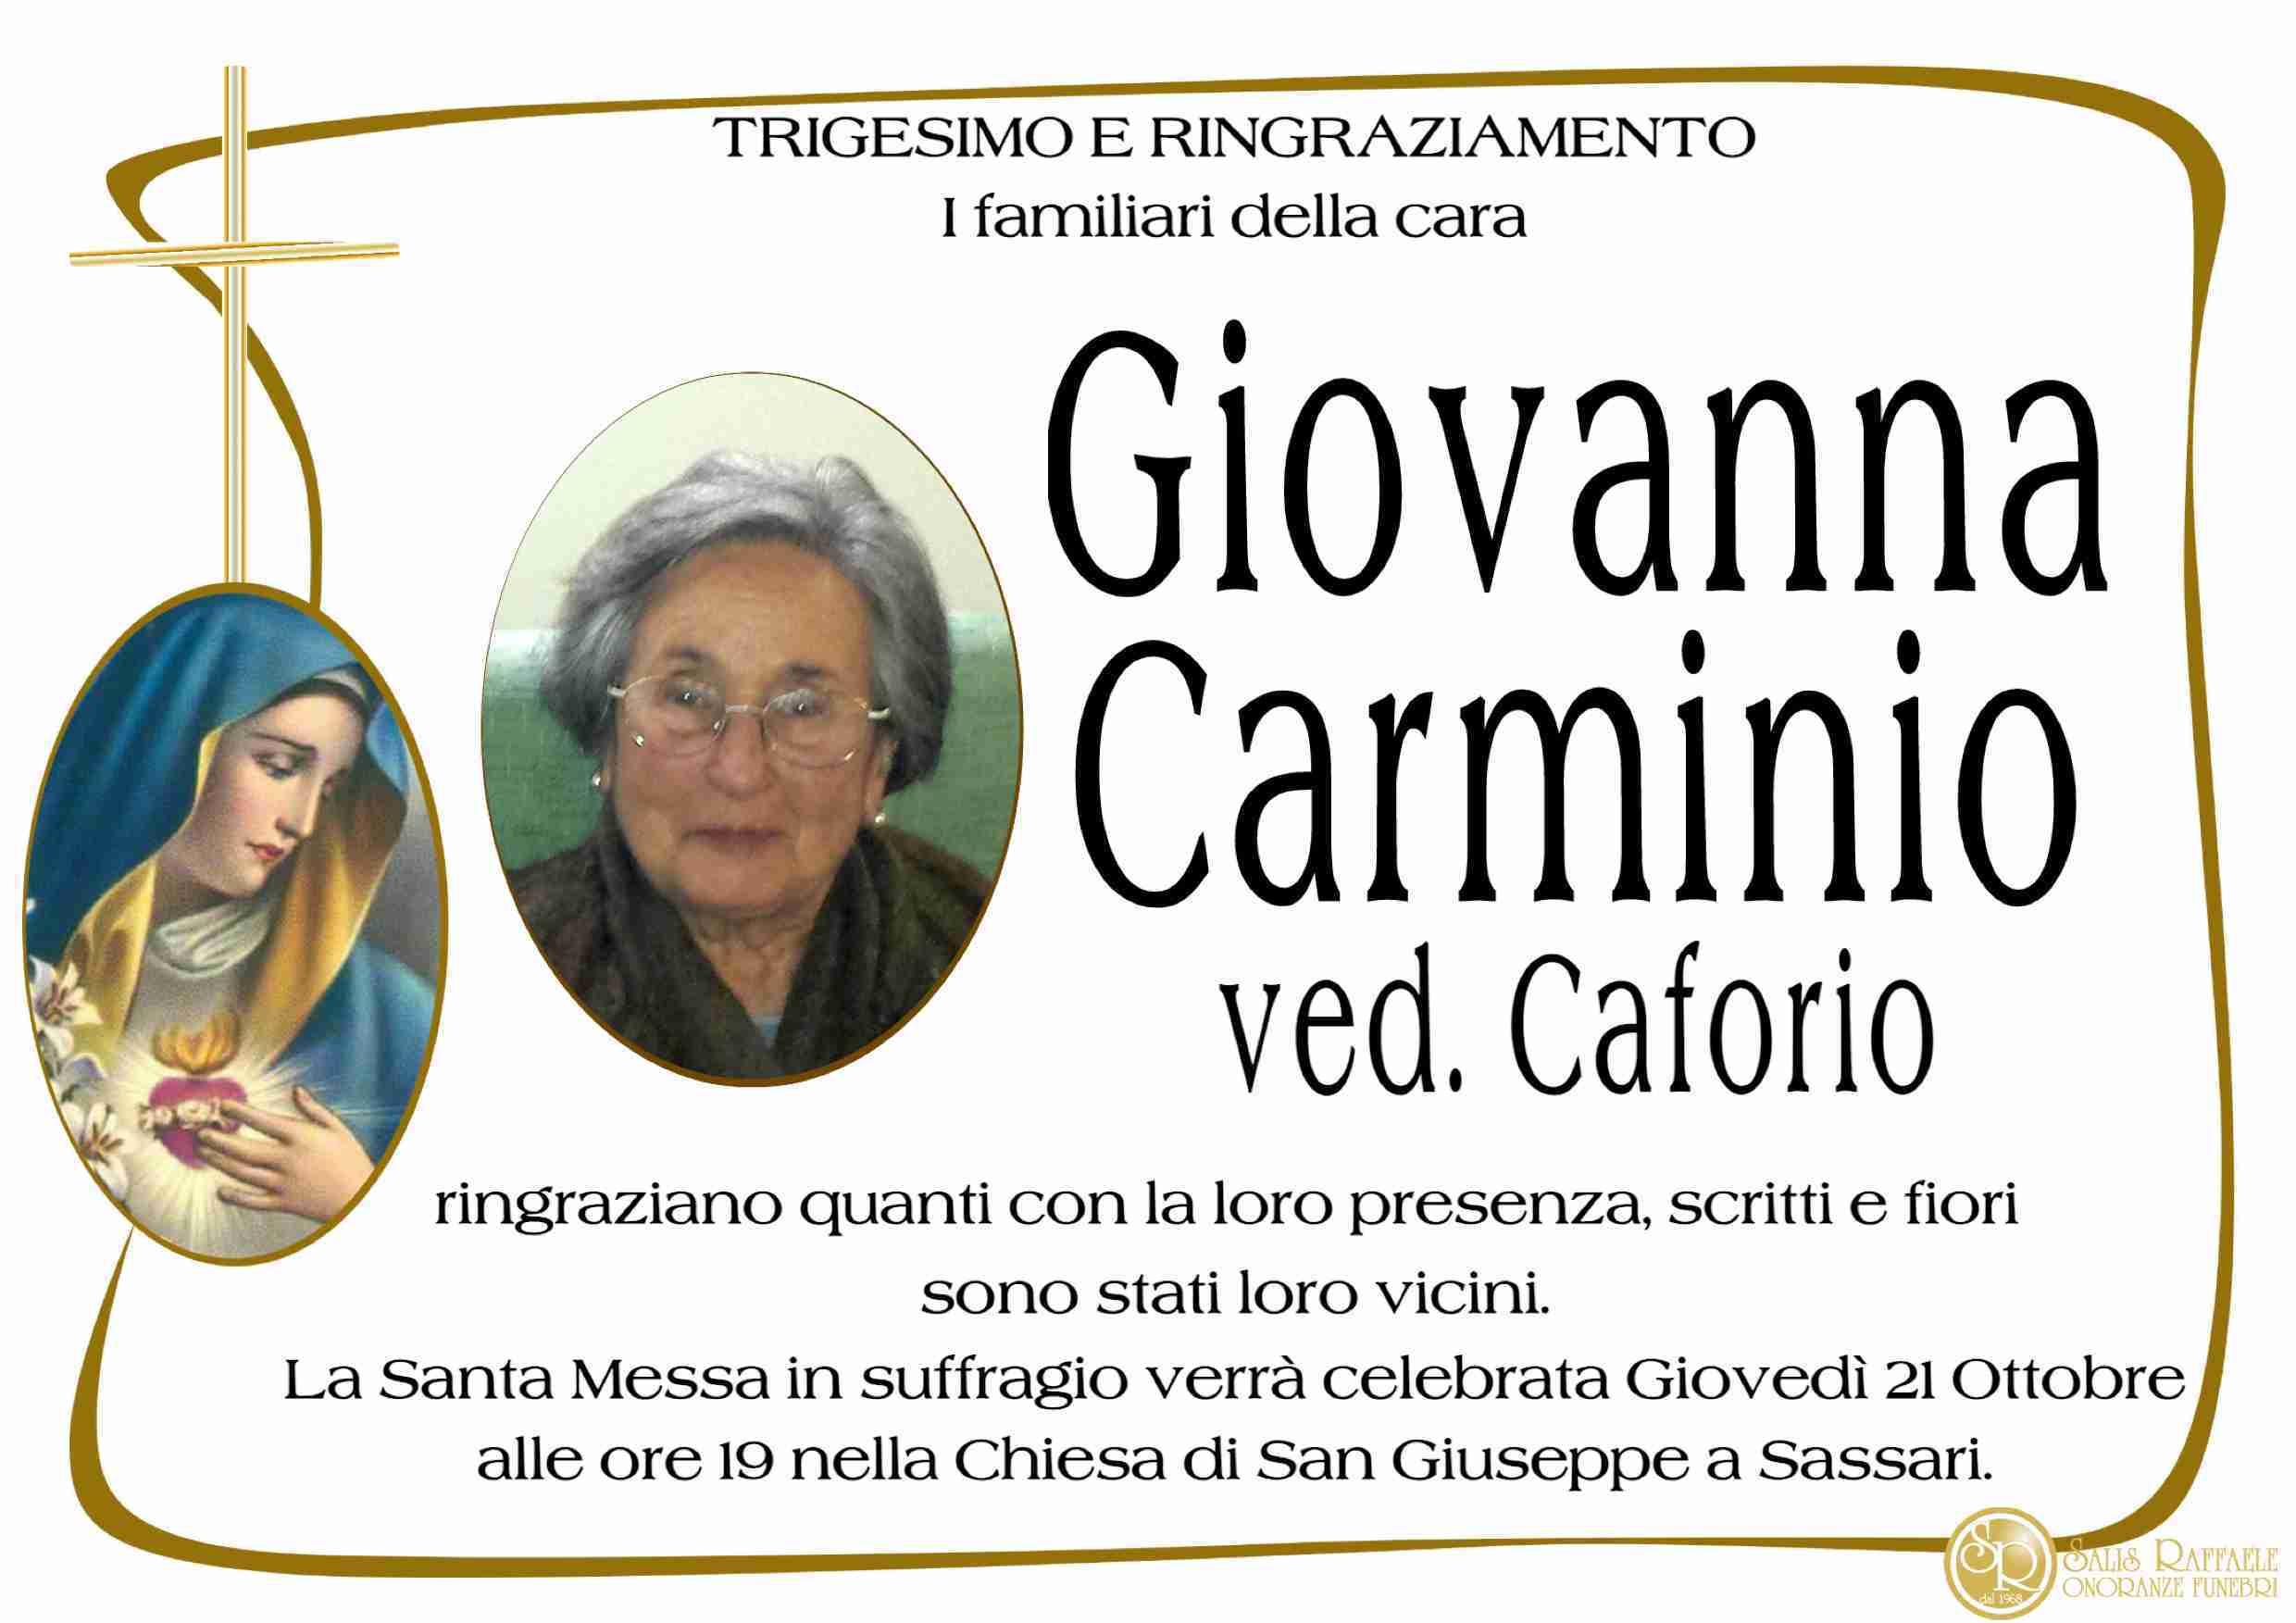 Giovanna Carminio